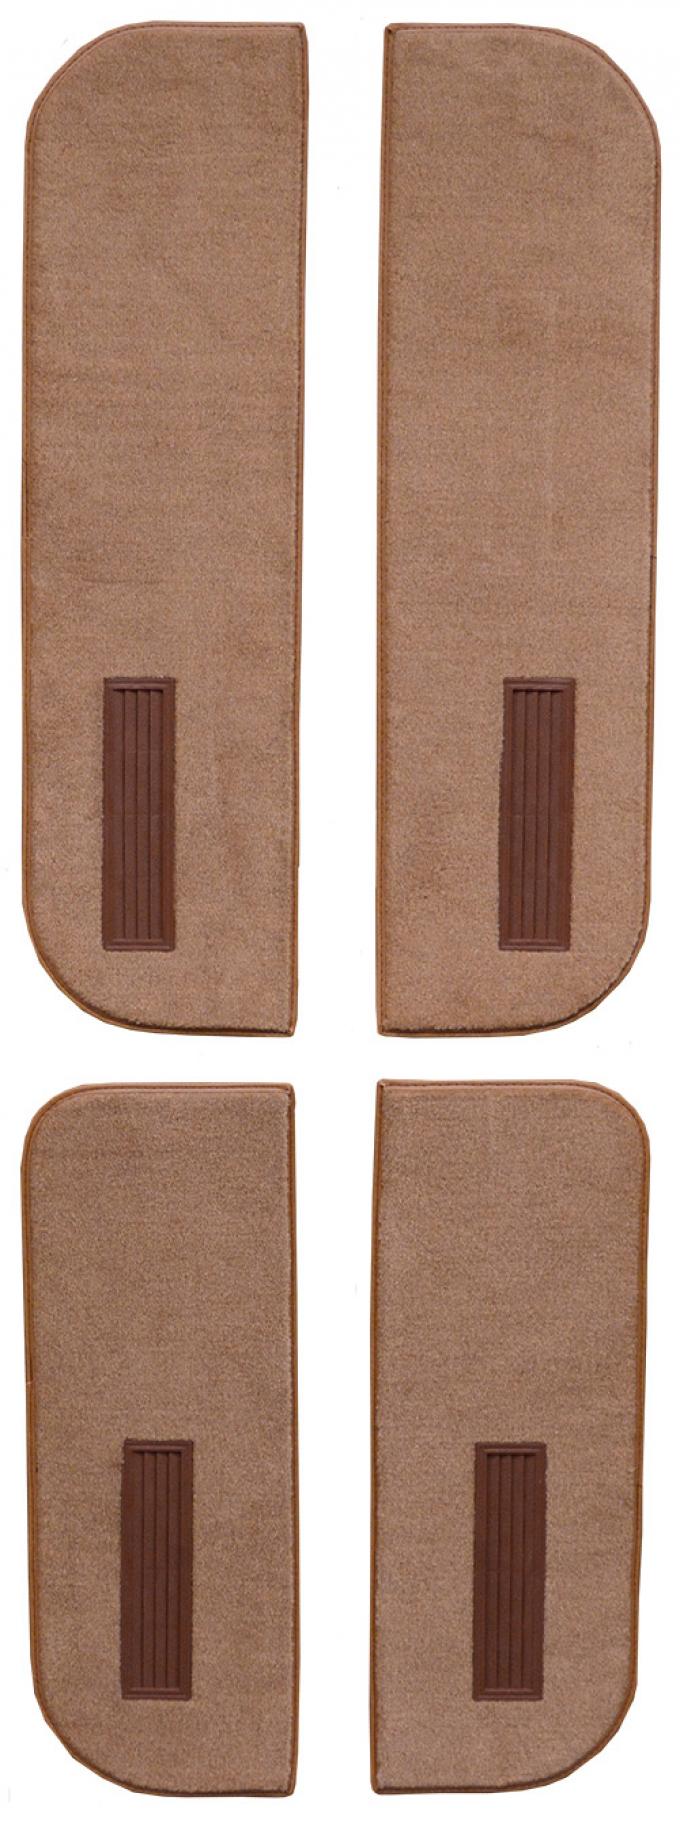 ACC 1987-1988 Chevrolet R10 Suburban Door Panel Inserts on Cardboard w/Vents 4pc Cutpile Carpet